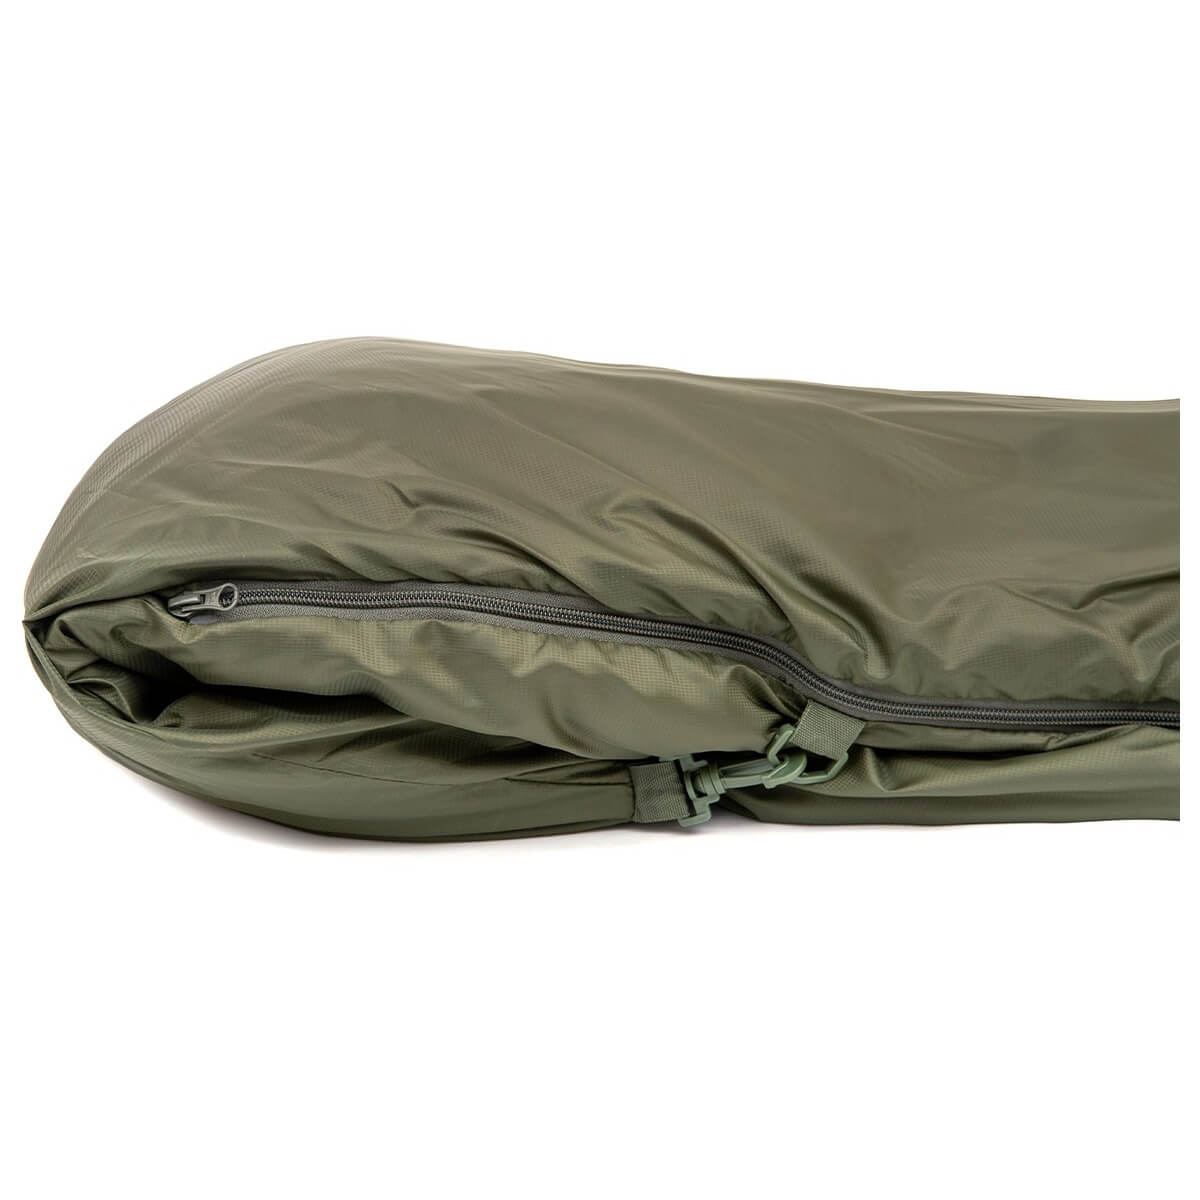 Snugpak Softie Elite 1 Sleeping Bag Olive Green - John Bull Clothing